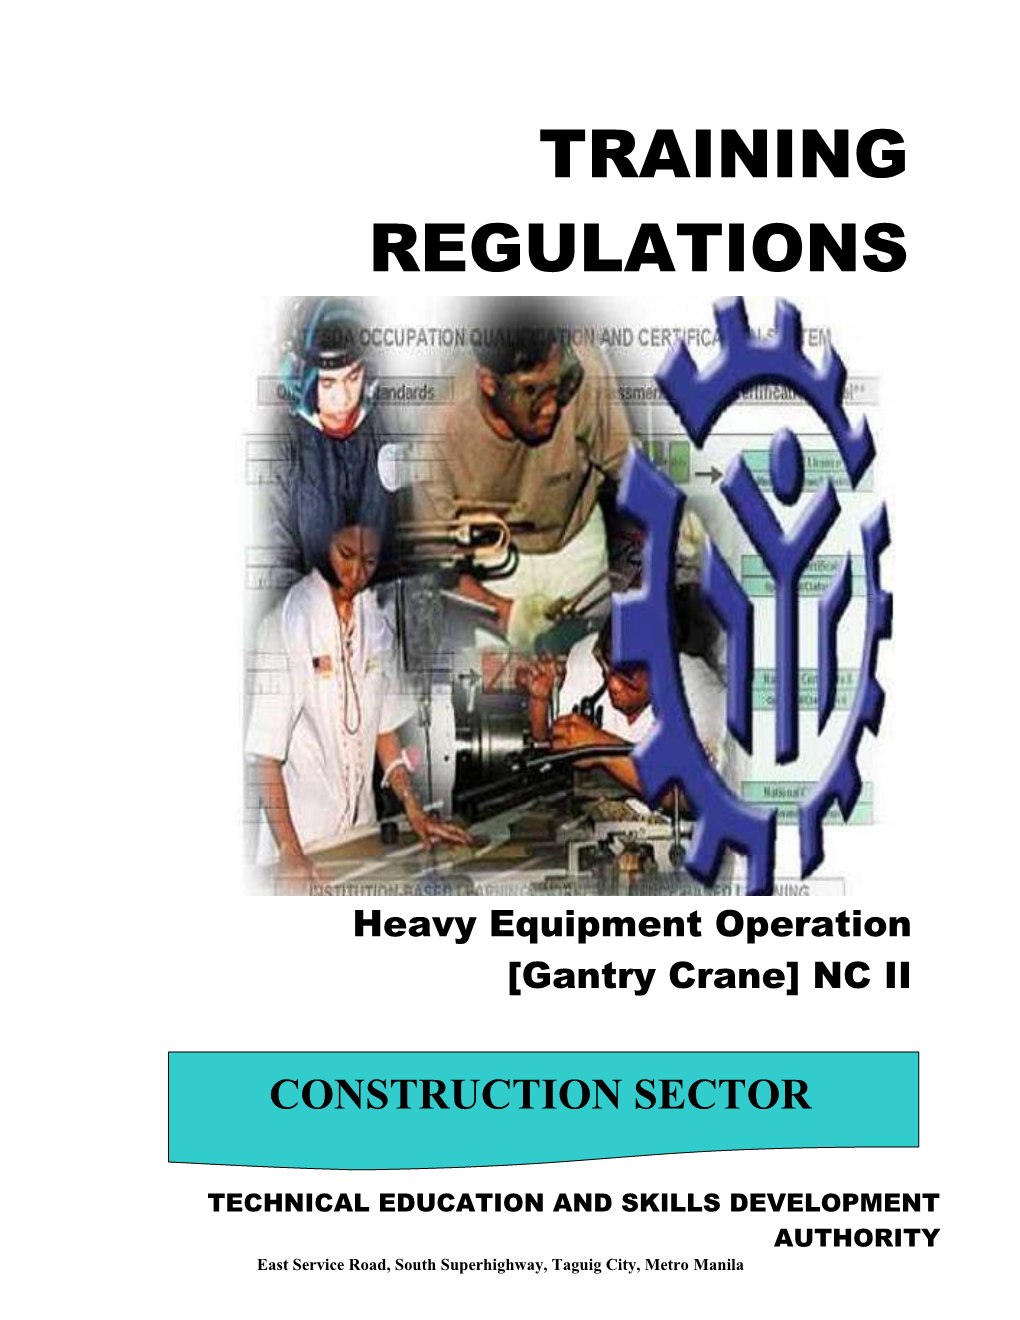 Construction - Heavy Equipment Sub-Sector